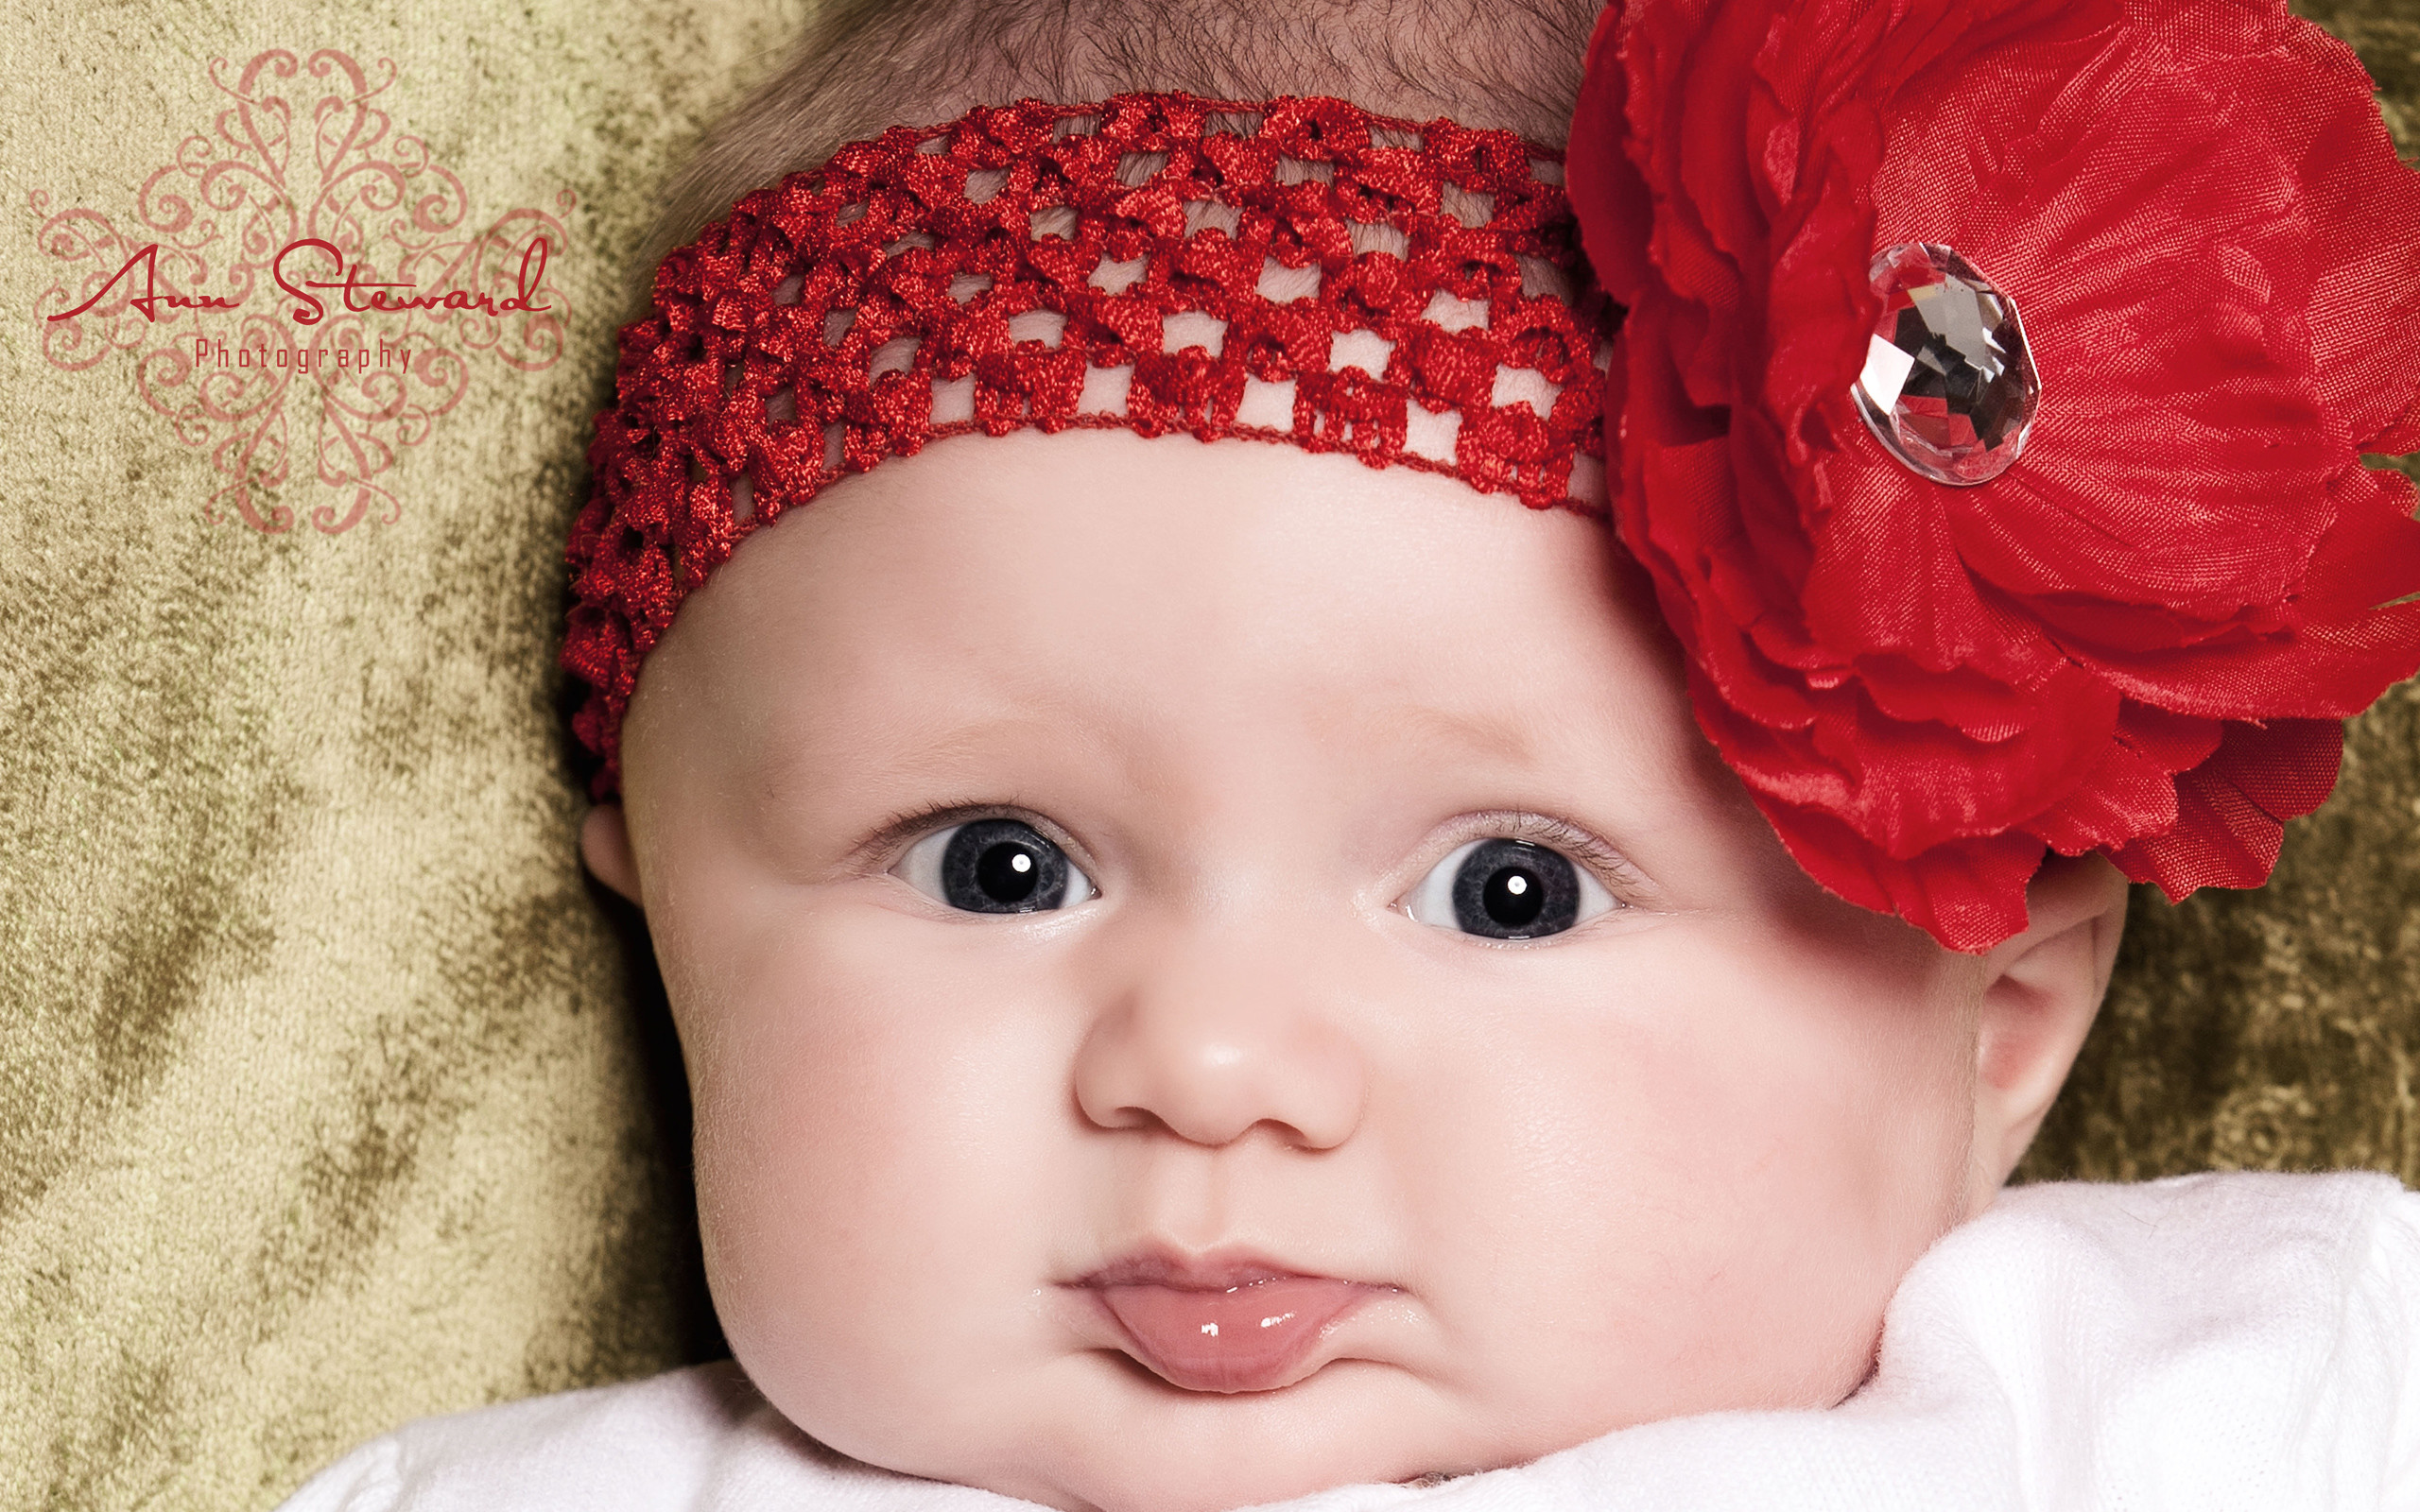 Newborn baby photos free download 924 jpg files